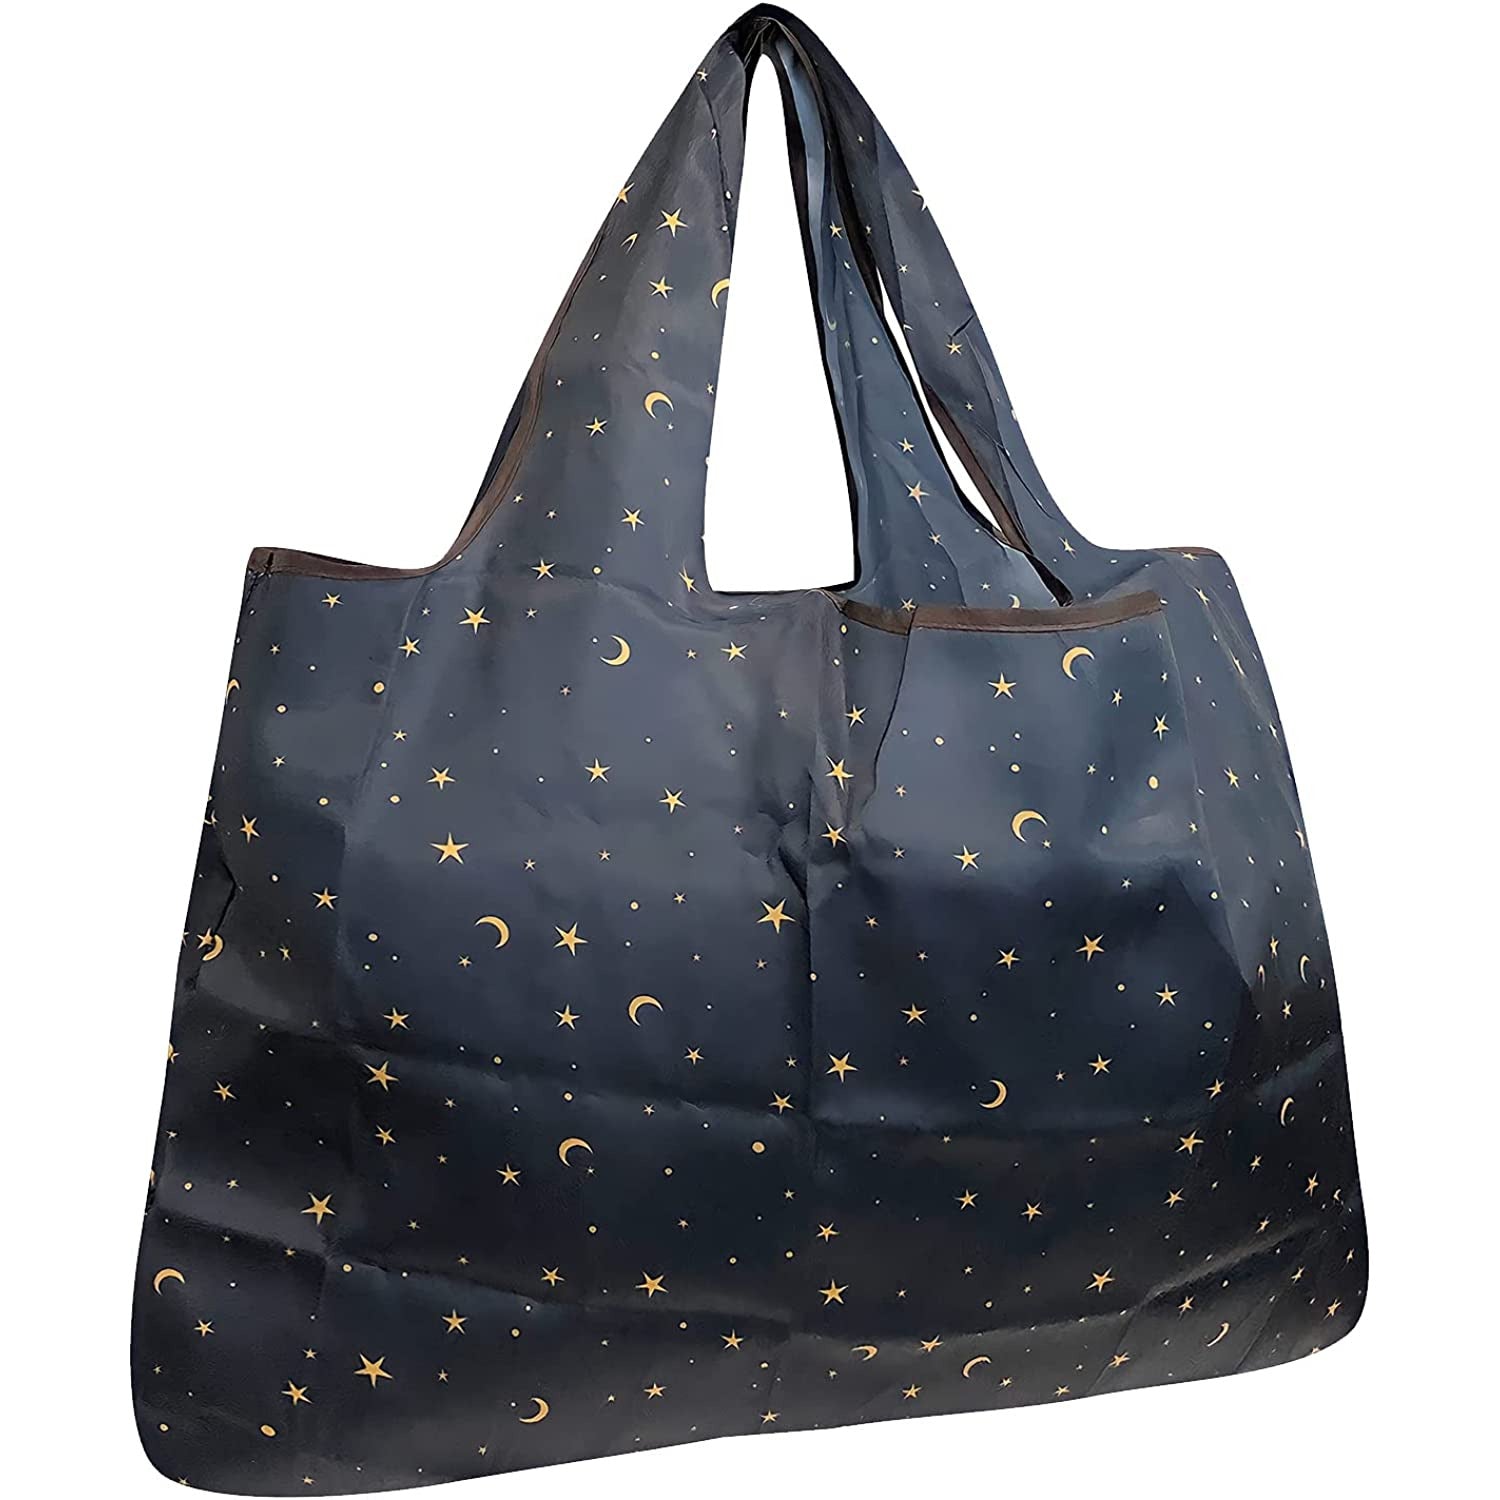 wholesale handbag - Buy wholesale handbag with free shipping on AliExpress